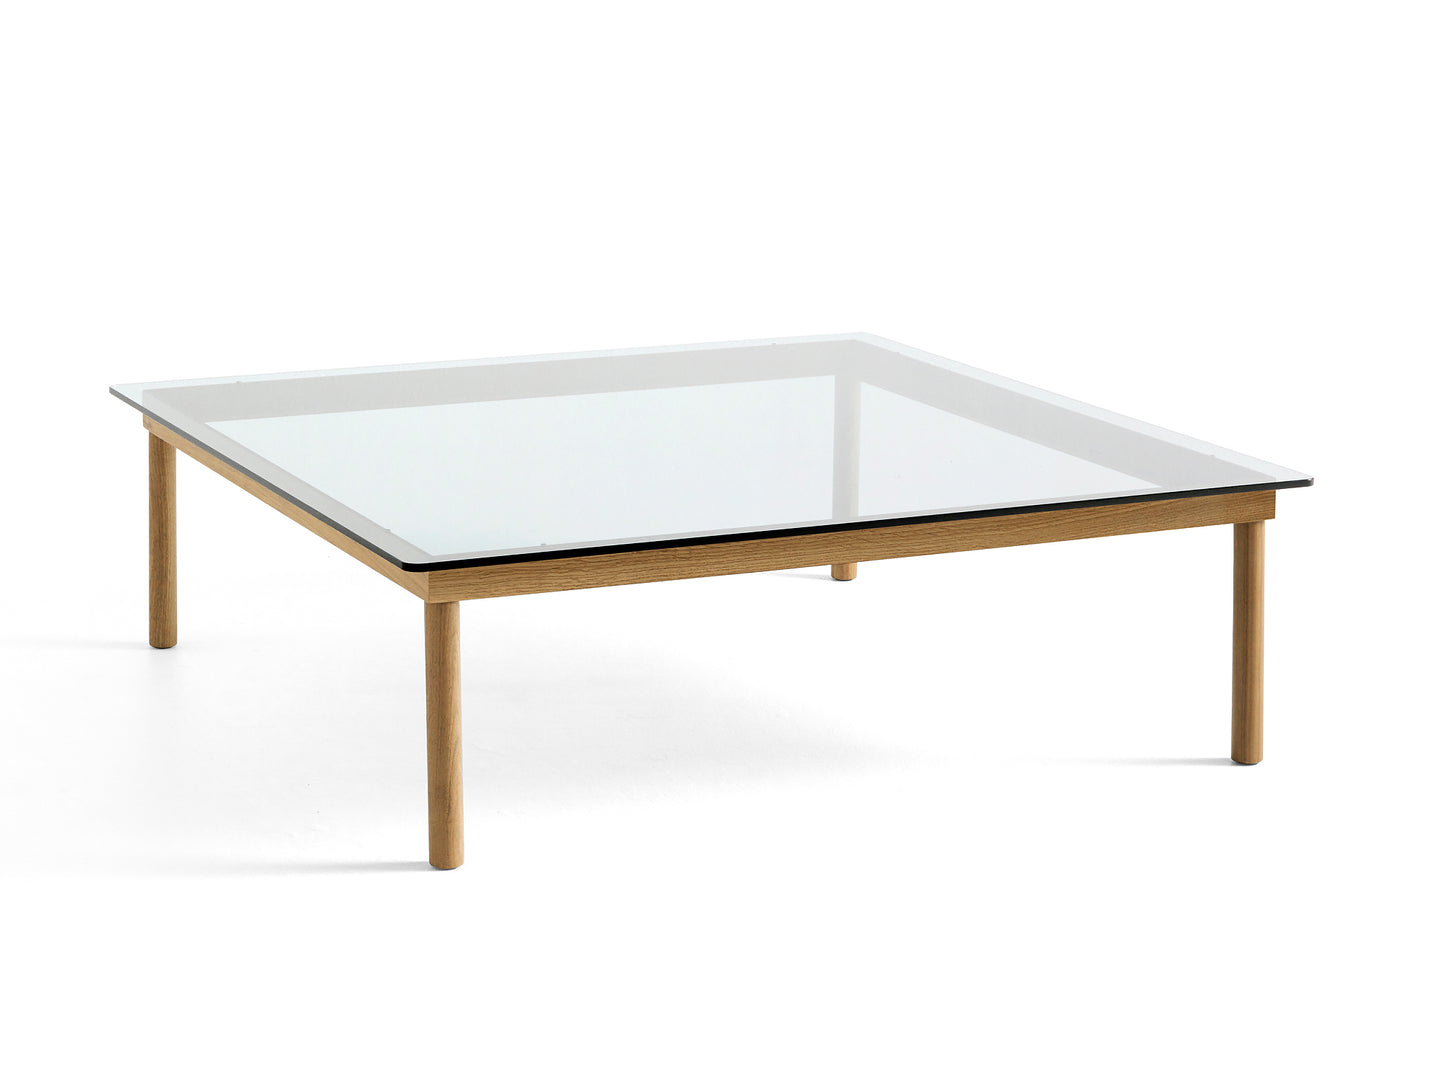 Kofi Table / 120 x 120 cm / Lacquered Oak Base / Clear Glass Tabletop / HAY